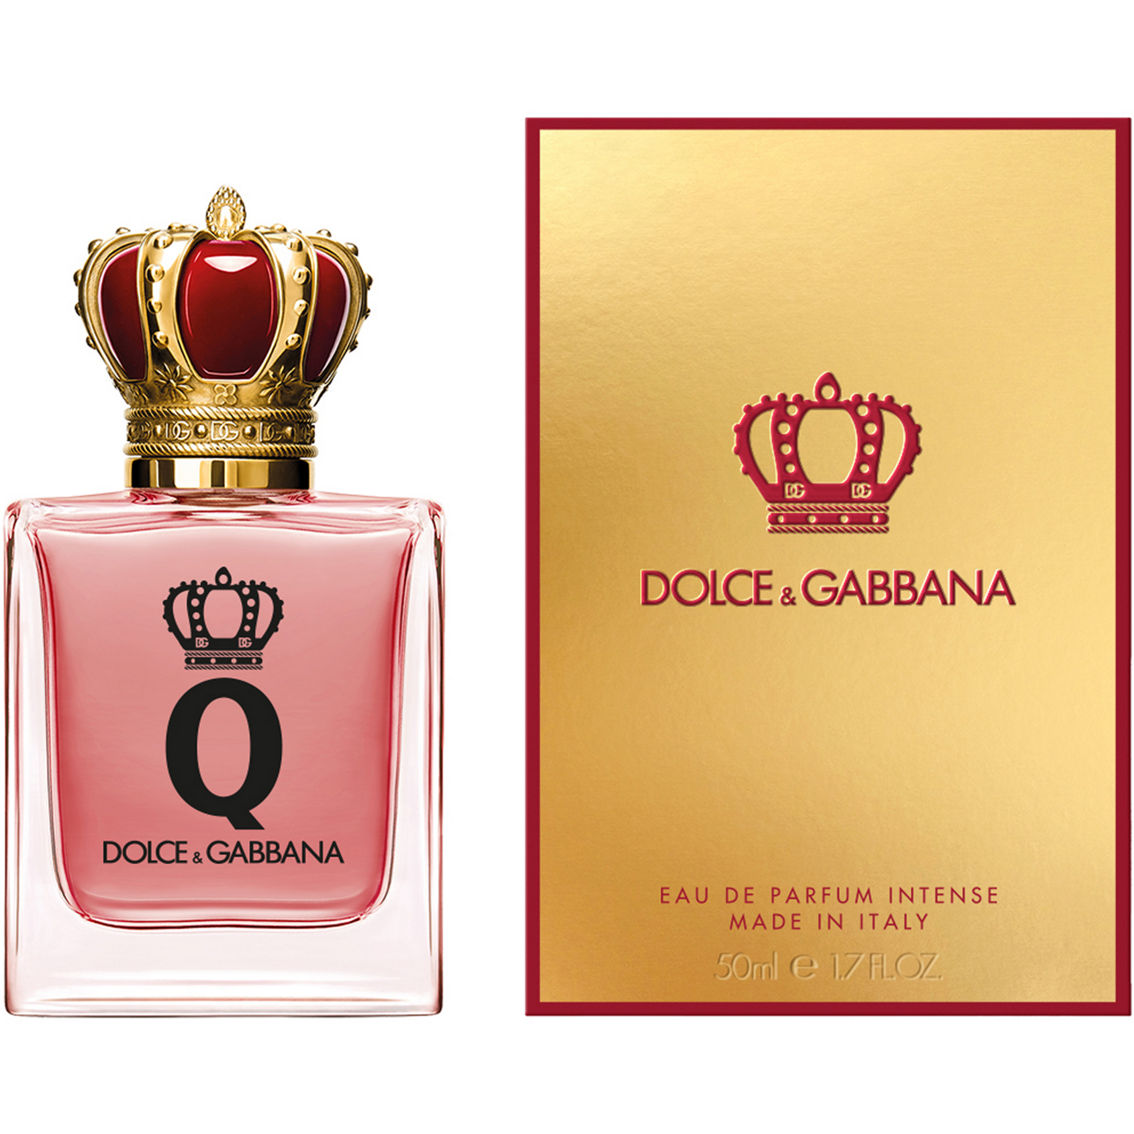 Dolce & Gabbana Q Eau de Parfum Intense Spray - Image 2 of 2